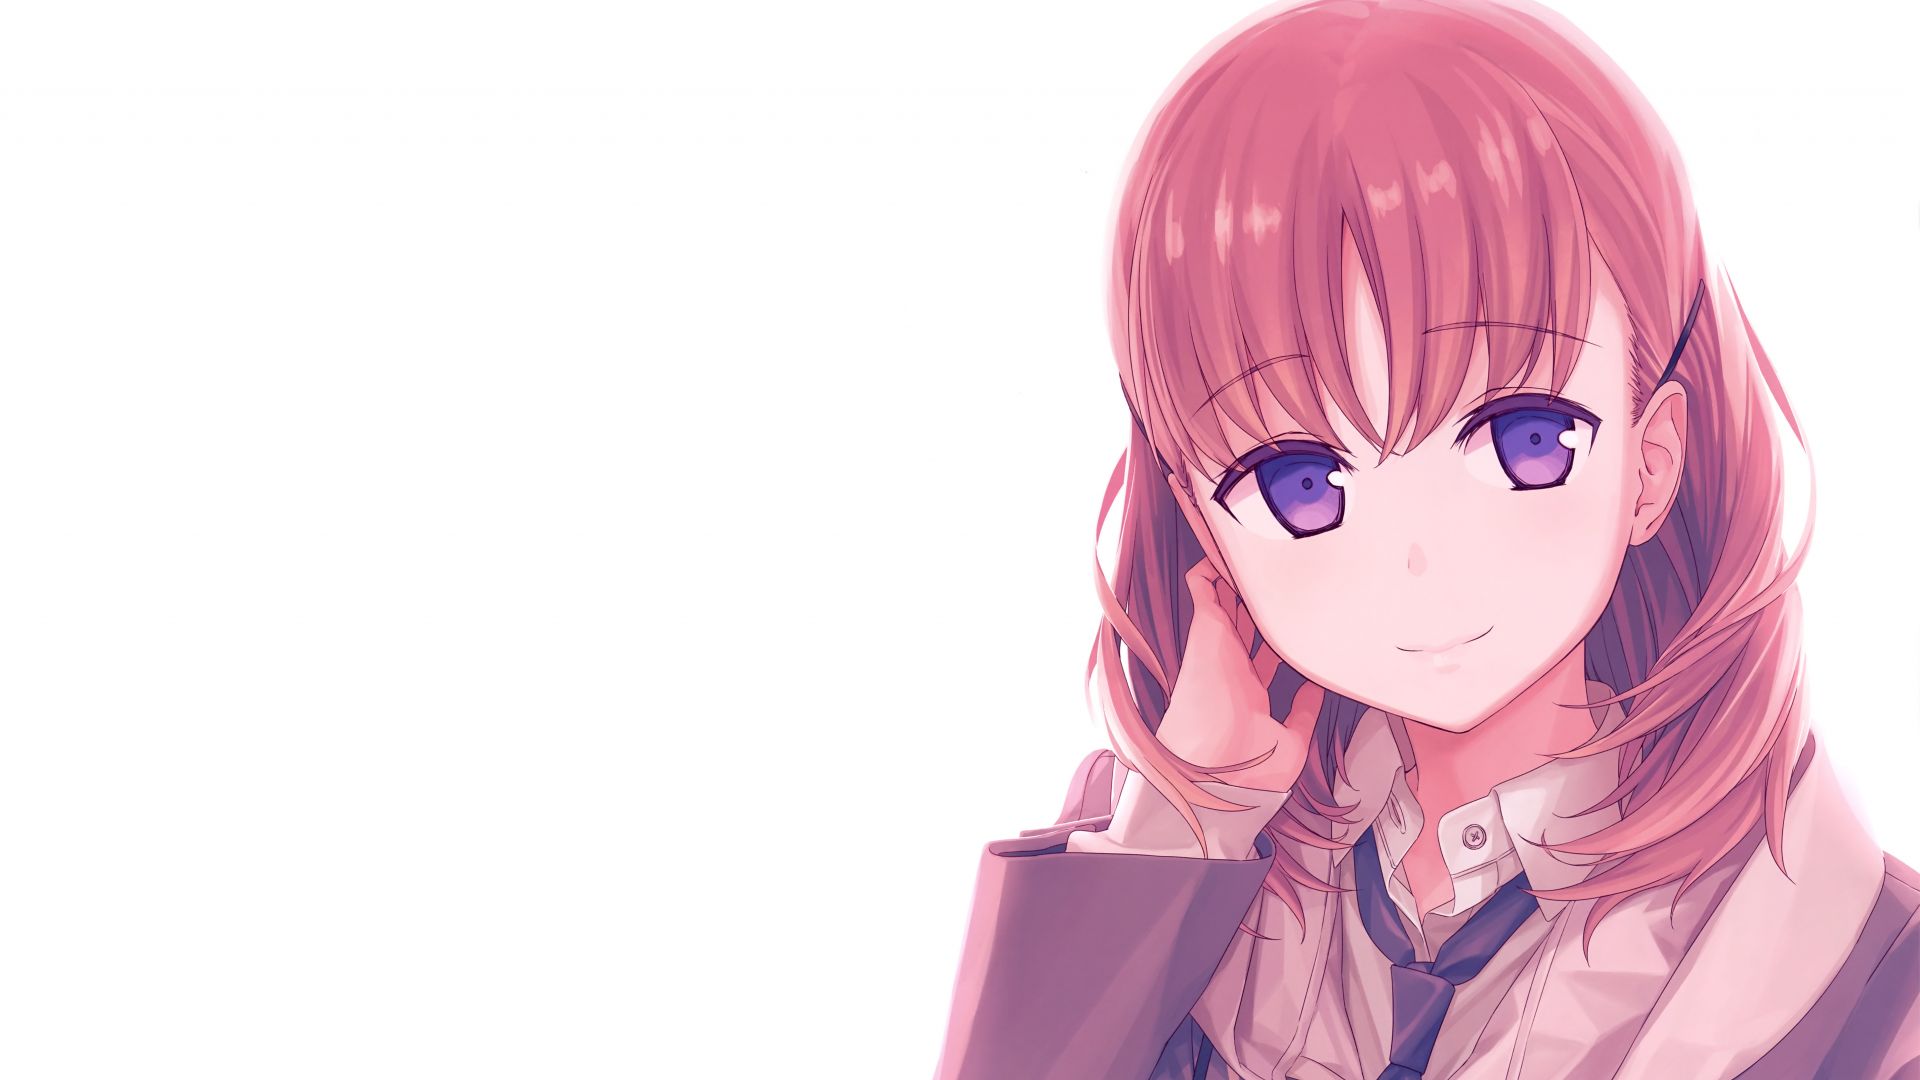 Wallpaper Purple eyes, cute anime girl, just because!